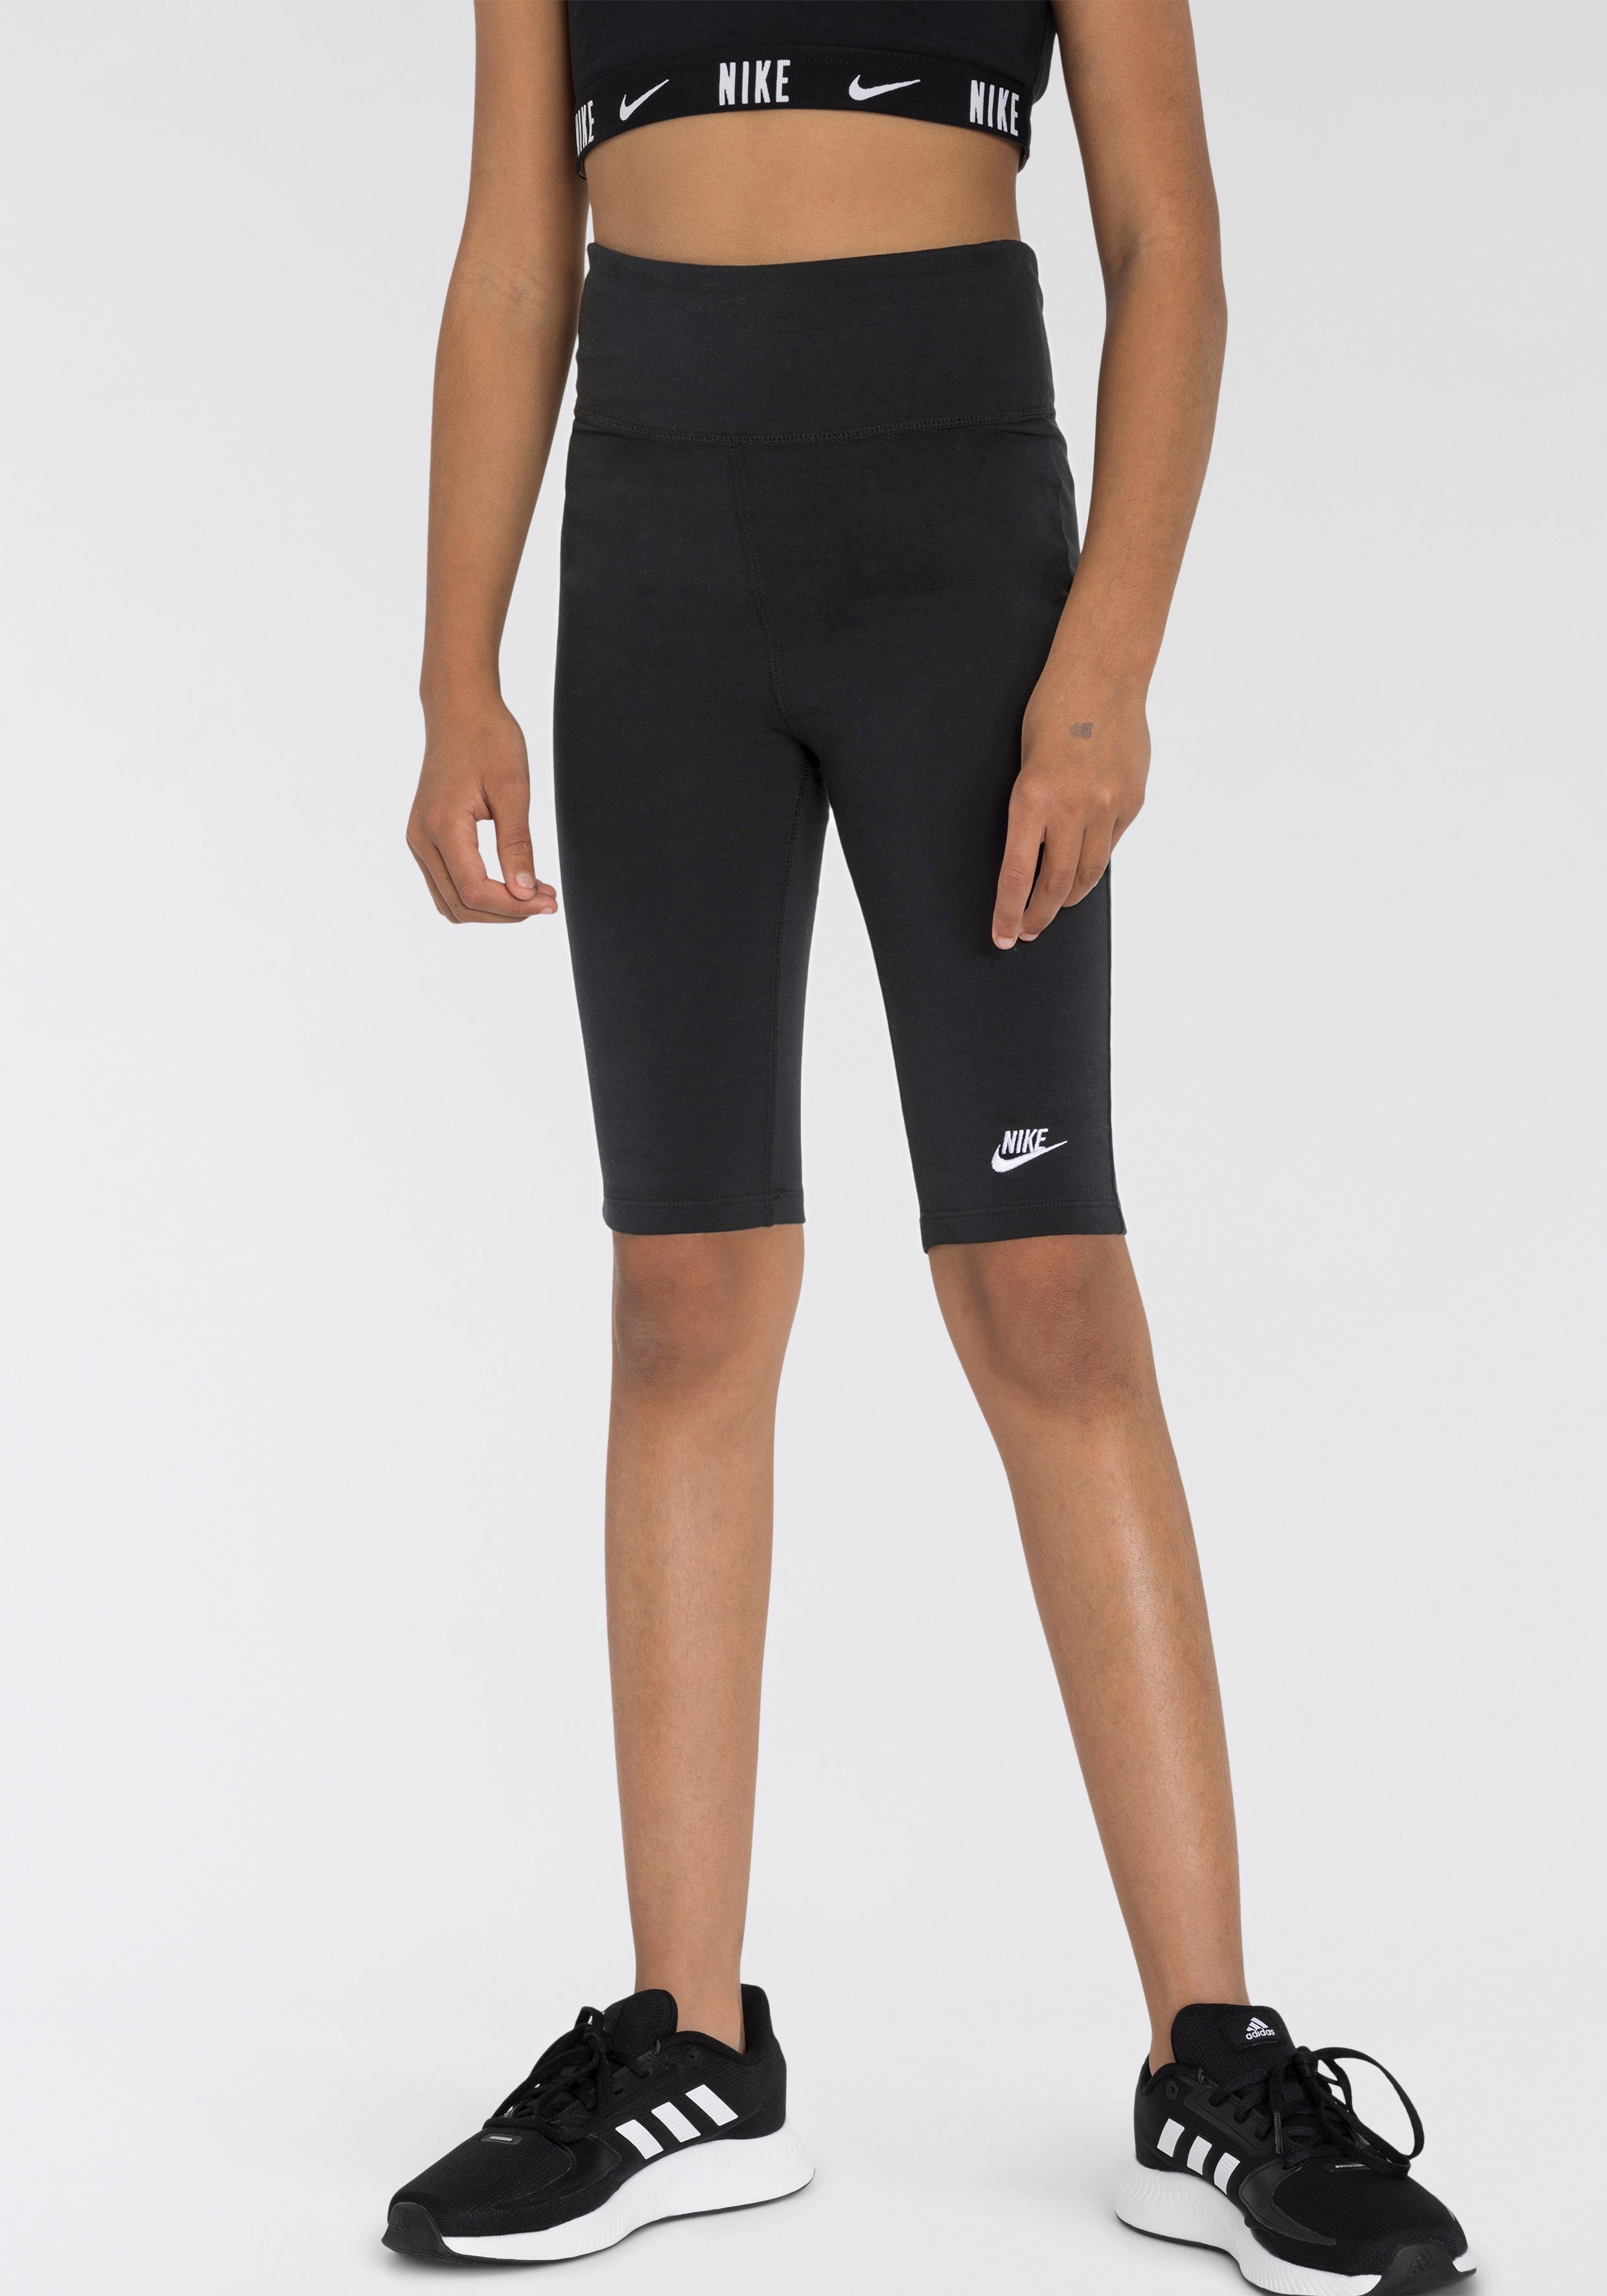 Nike Kids' " Shorts (Girls) schwarz Bike Shorts High-Rise Sportswear Big